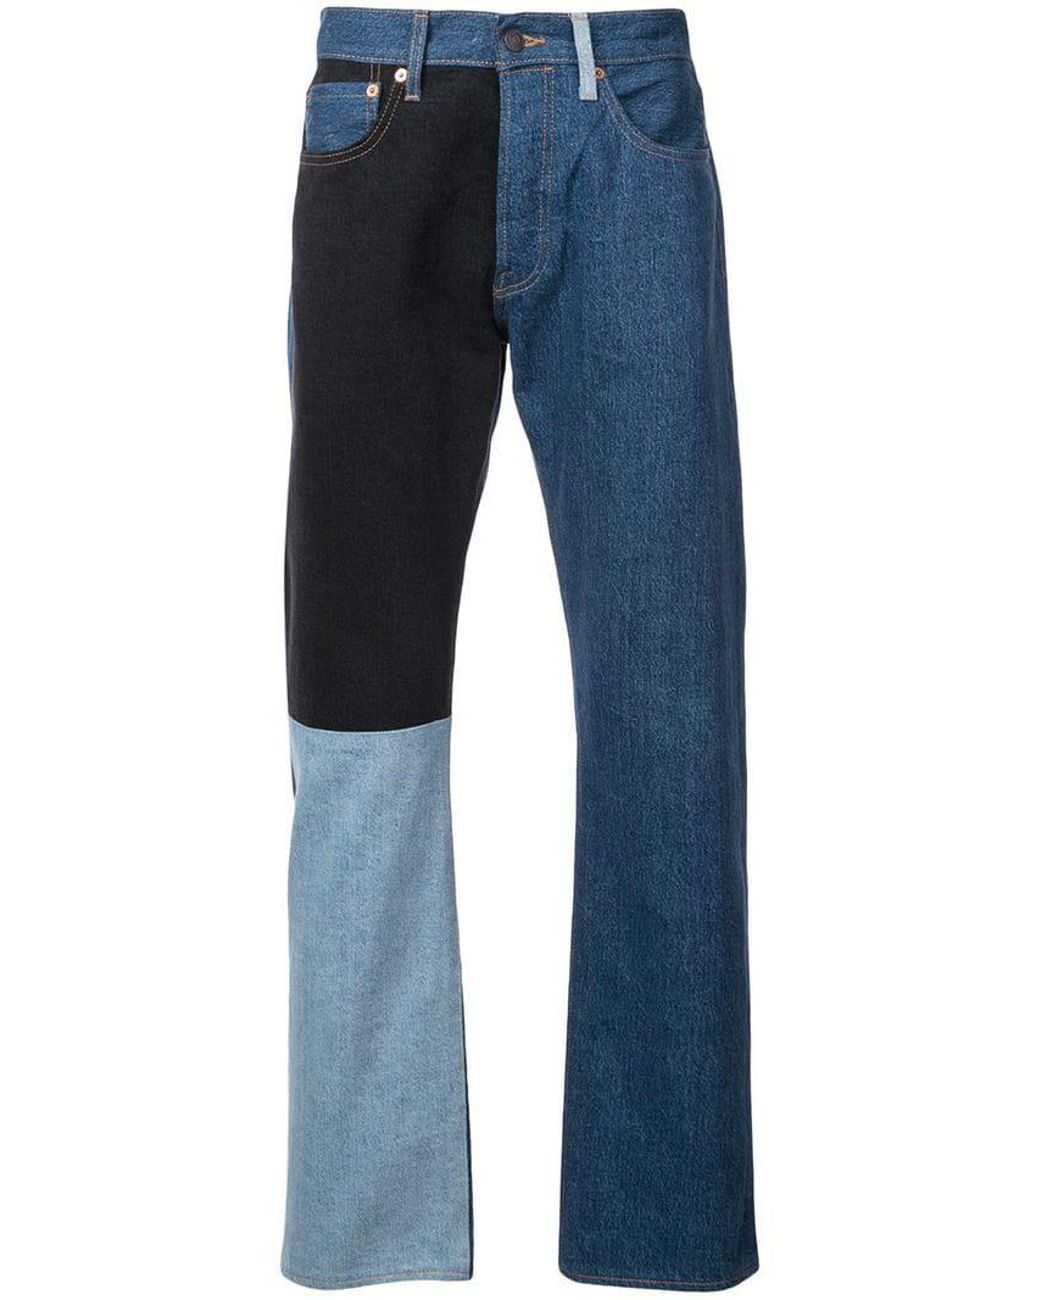 Gosha Rubchinskiy X Levi's Patchwork Jeans in Blue for Men | Lyst